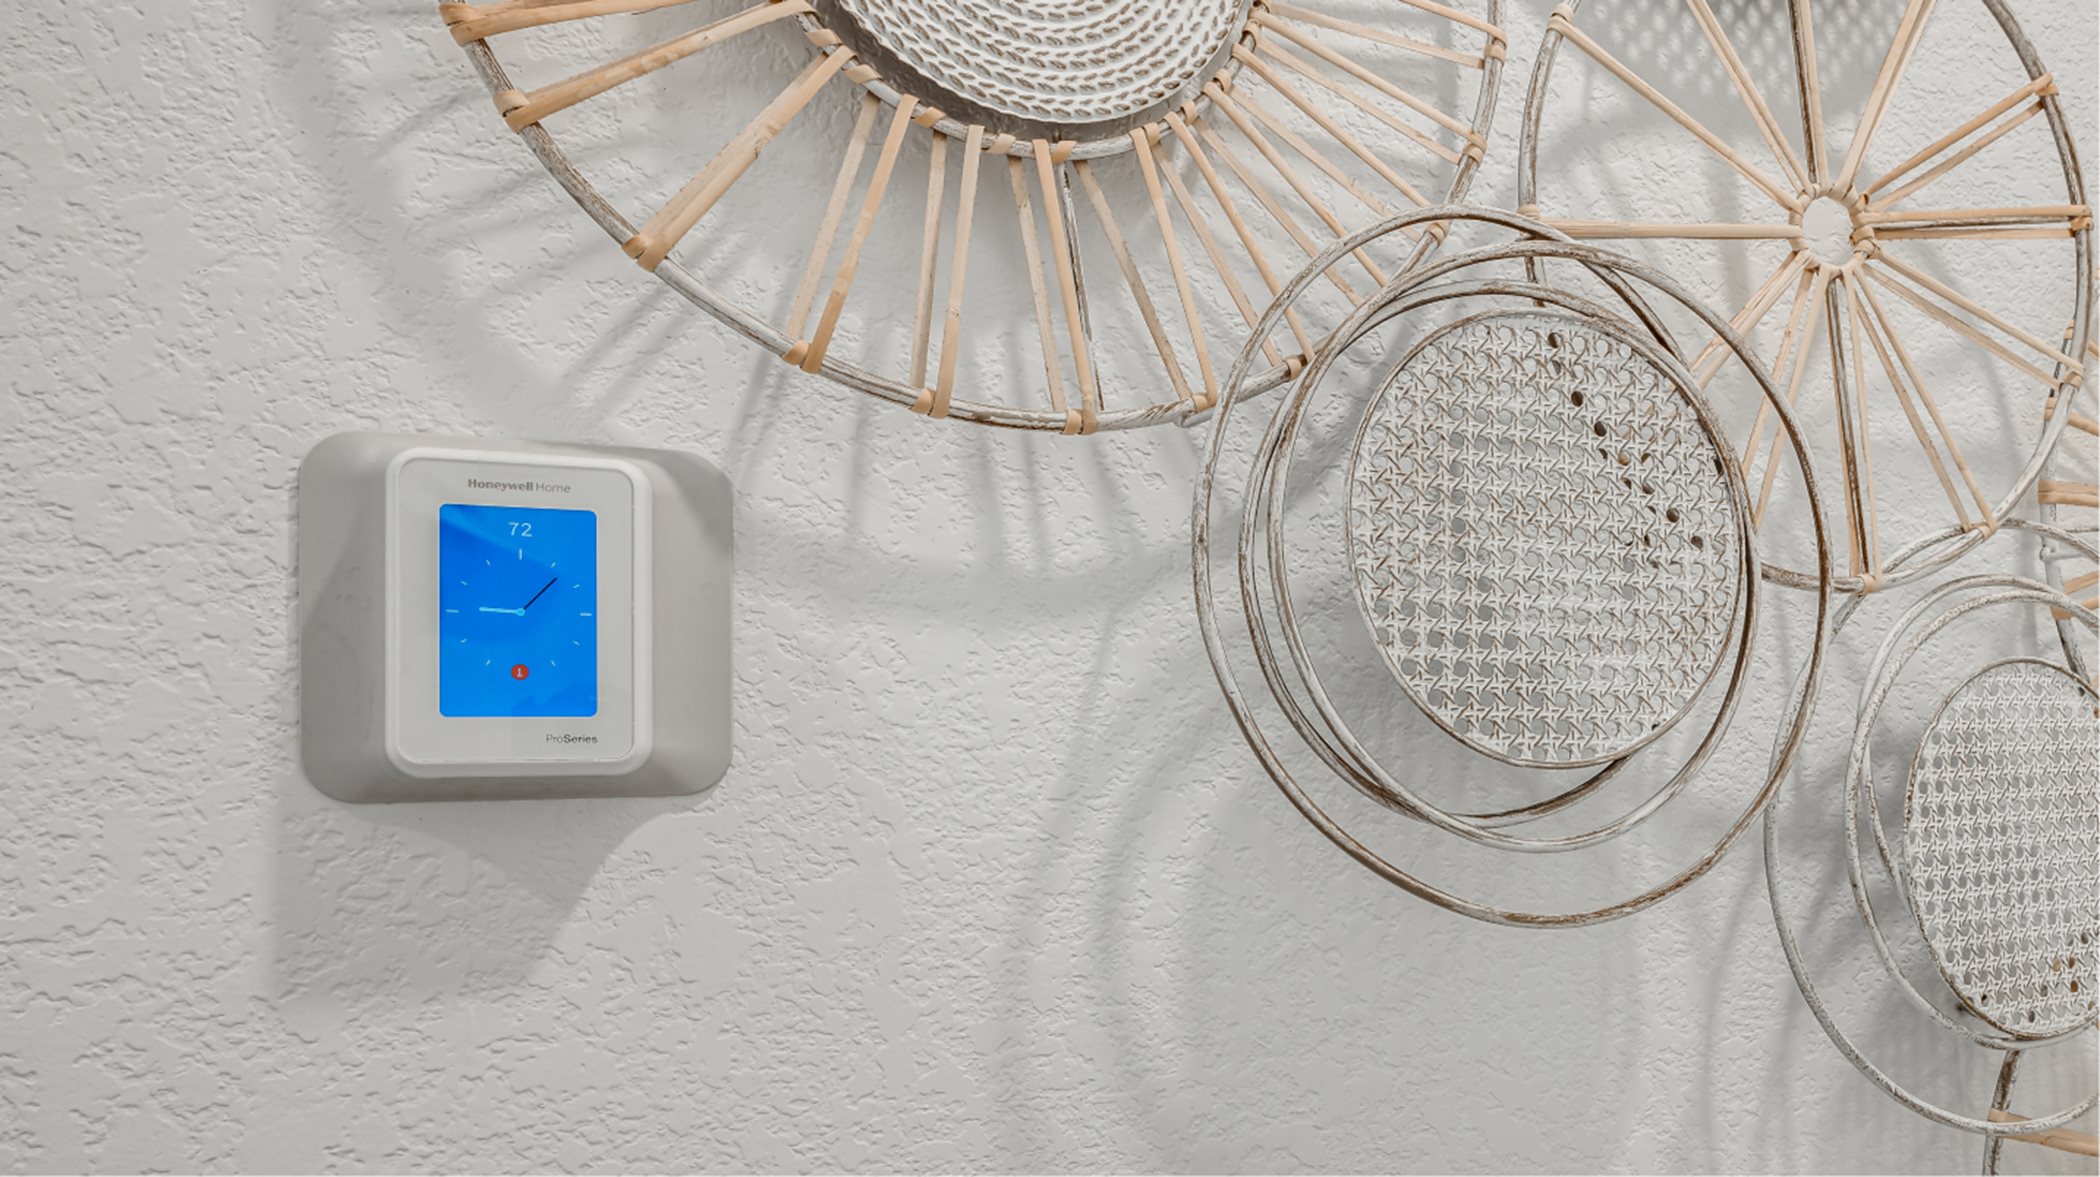 Honeywell T6 Pro smart thermostat